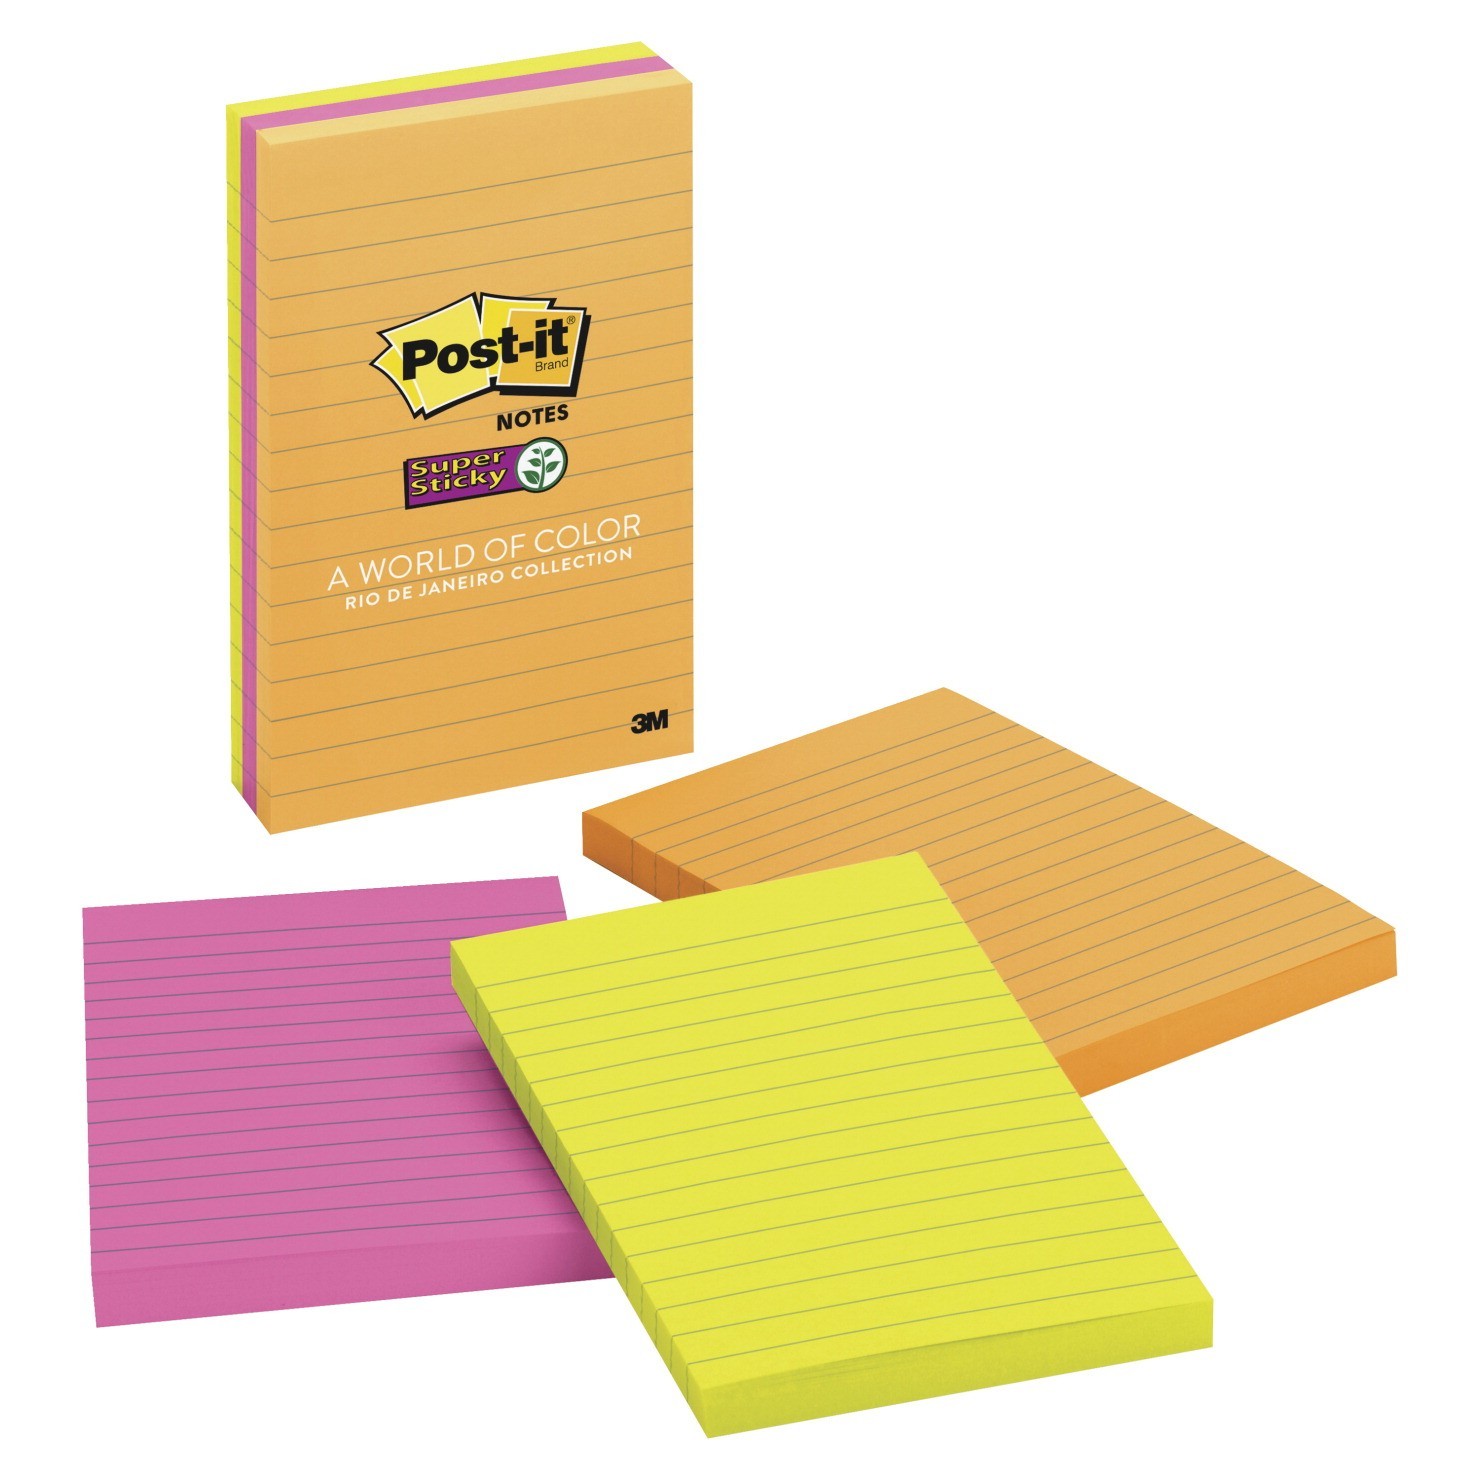 4 X 6 Post-it Super Sticky Notes, Ruled, 90 Sheets/Pad, Rio De Janeiro Colors - 3/Pkg